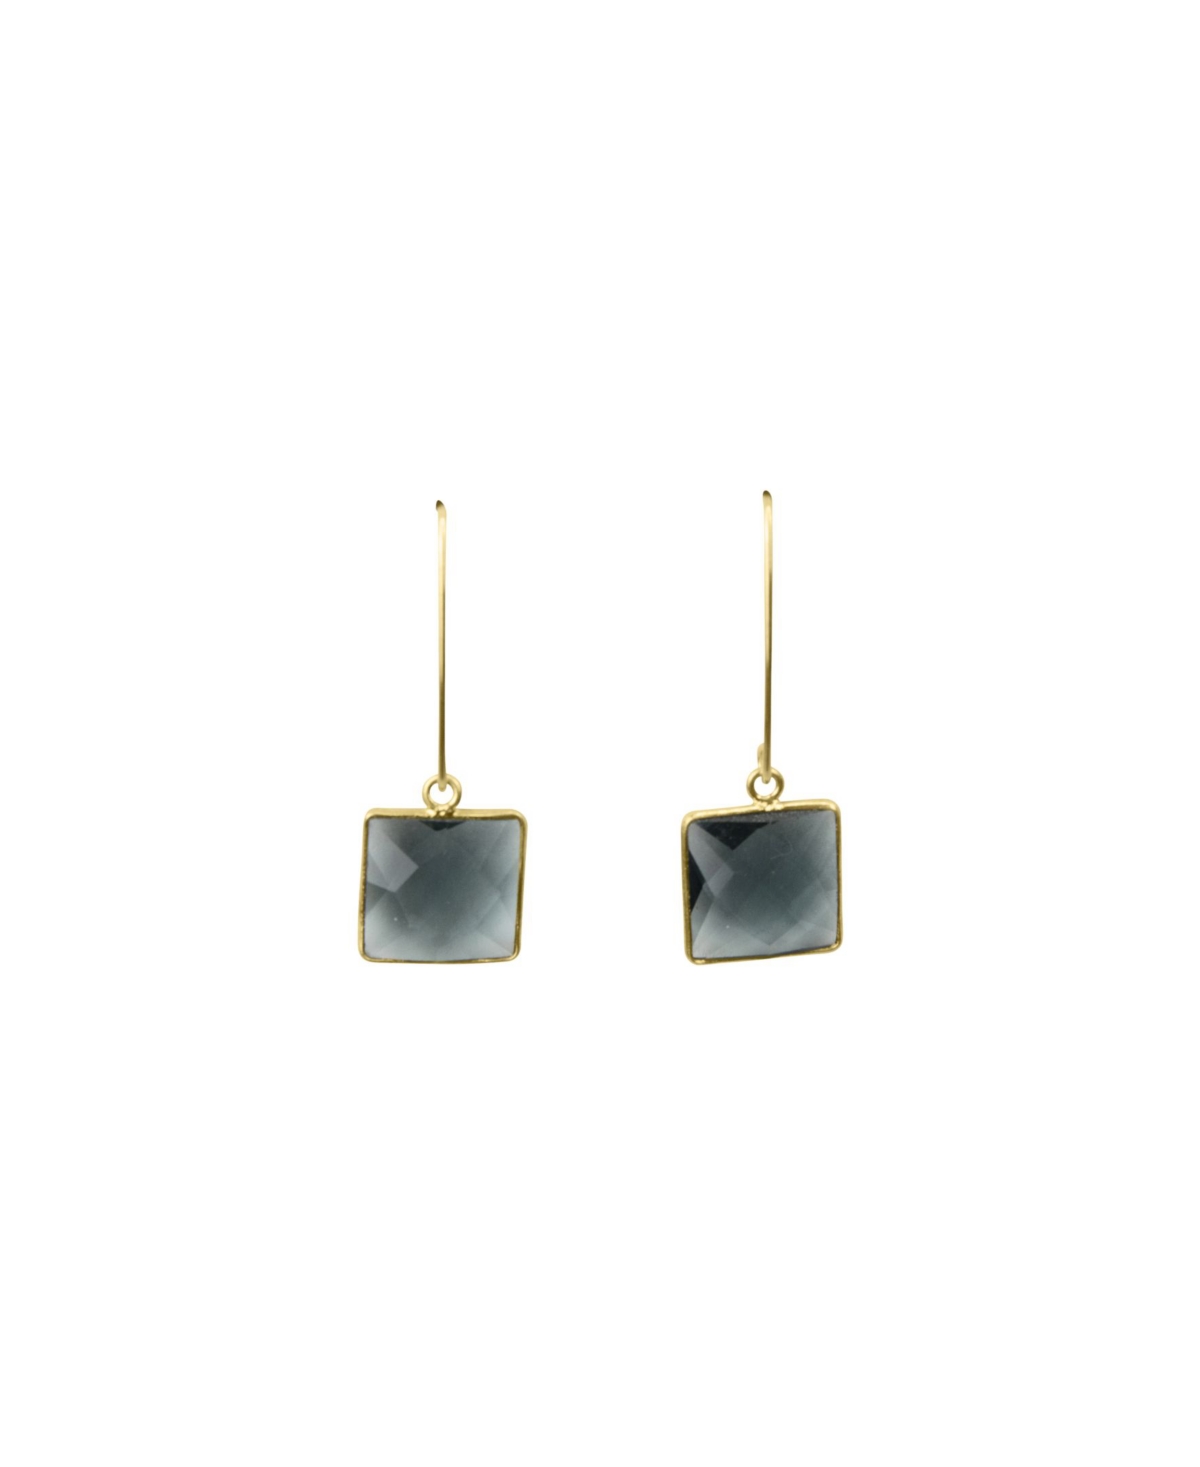 London Stone Drop Earrings with 14K Gold Filled Artesian Earwires - Gold - Fill